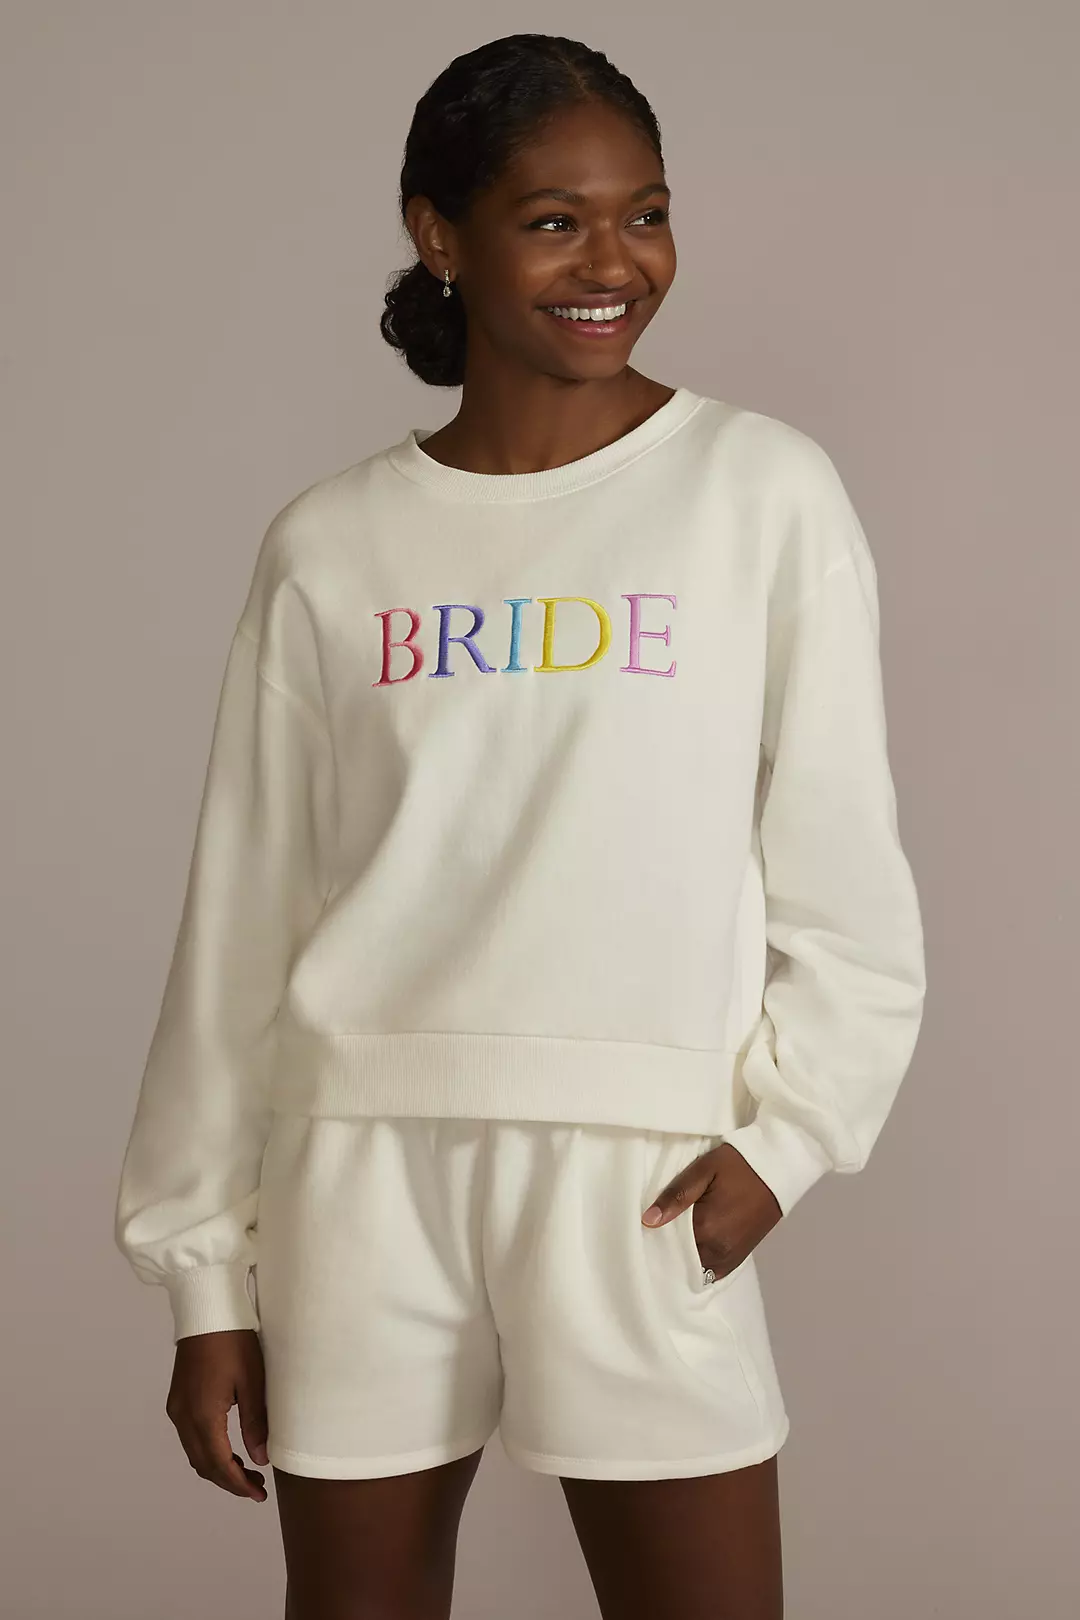 Colorful Embroidered Bride Sweatshirt Image